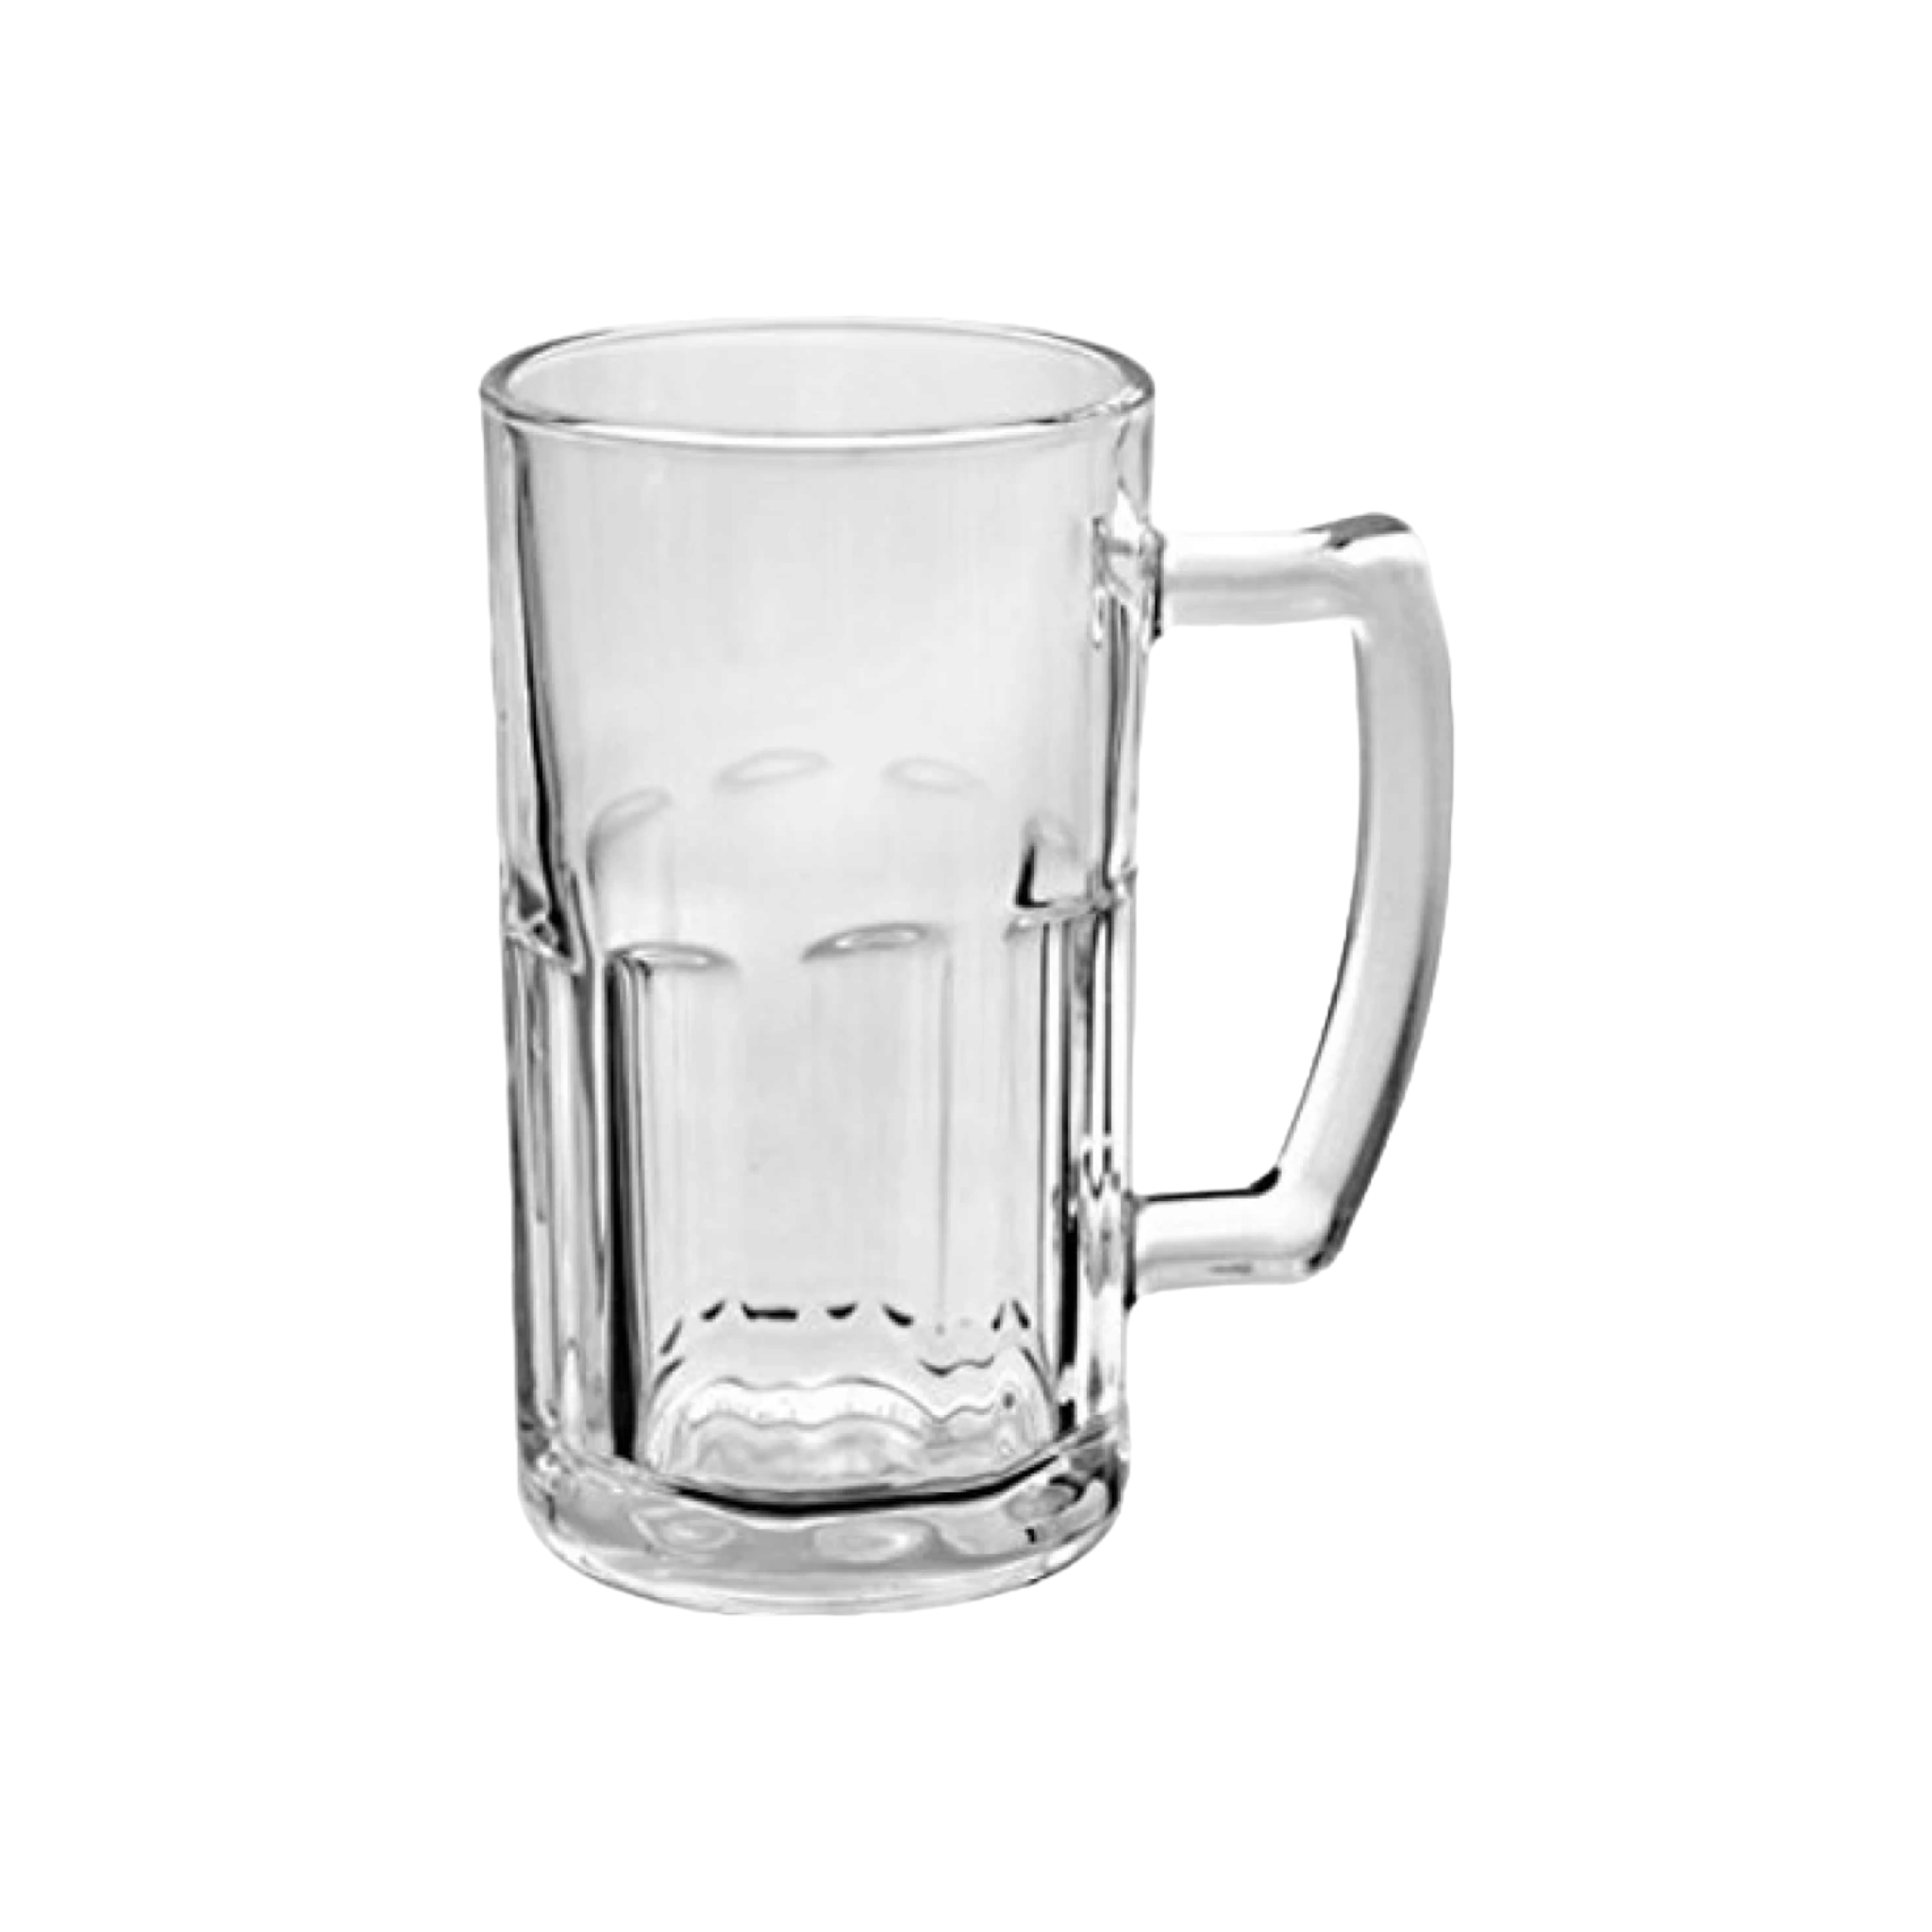 Glass Drinking Mug 600ml 2pc Set